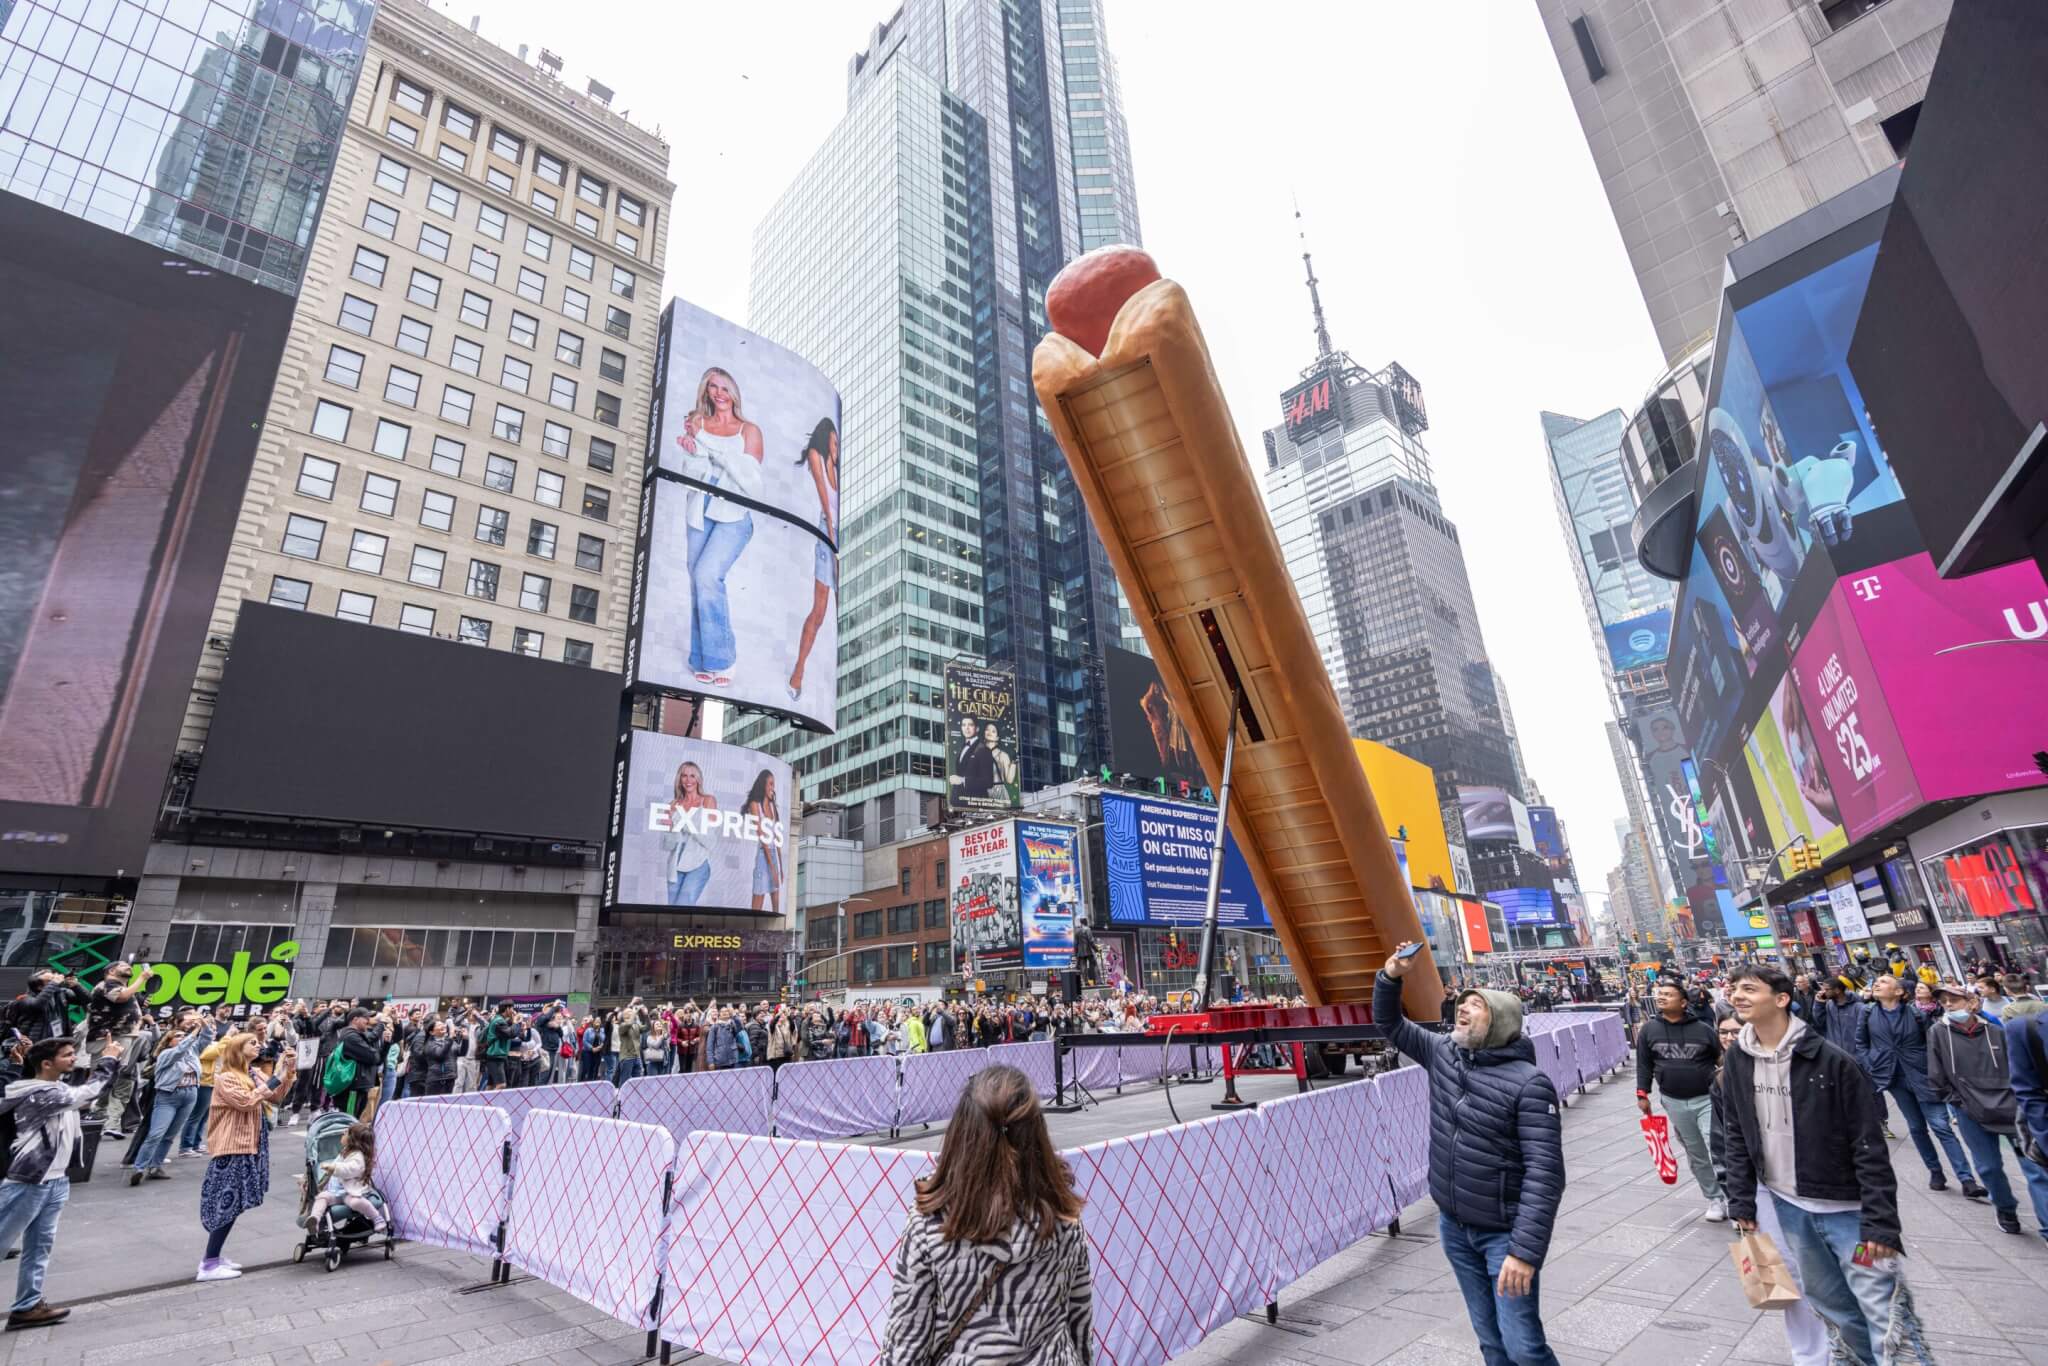 hot dog sculpture standing upright 